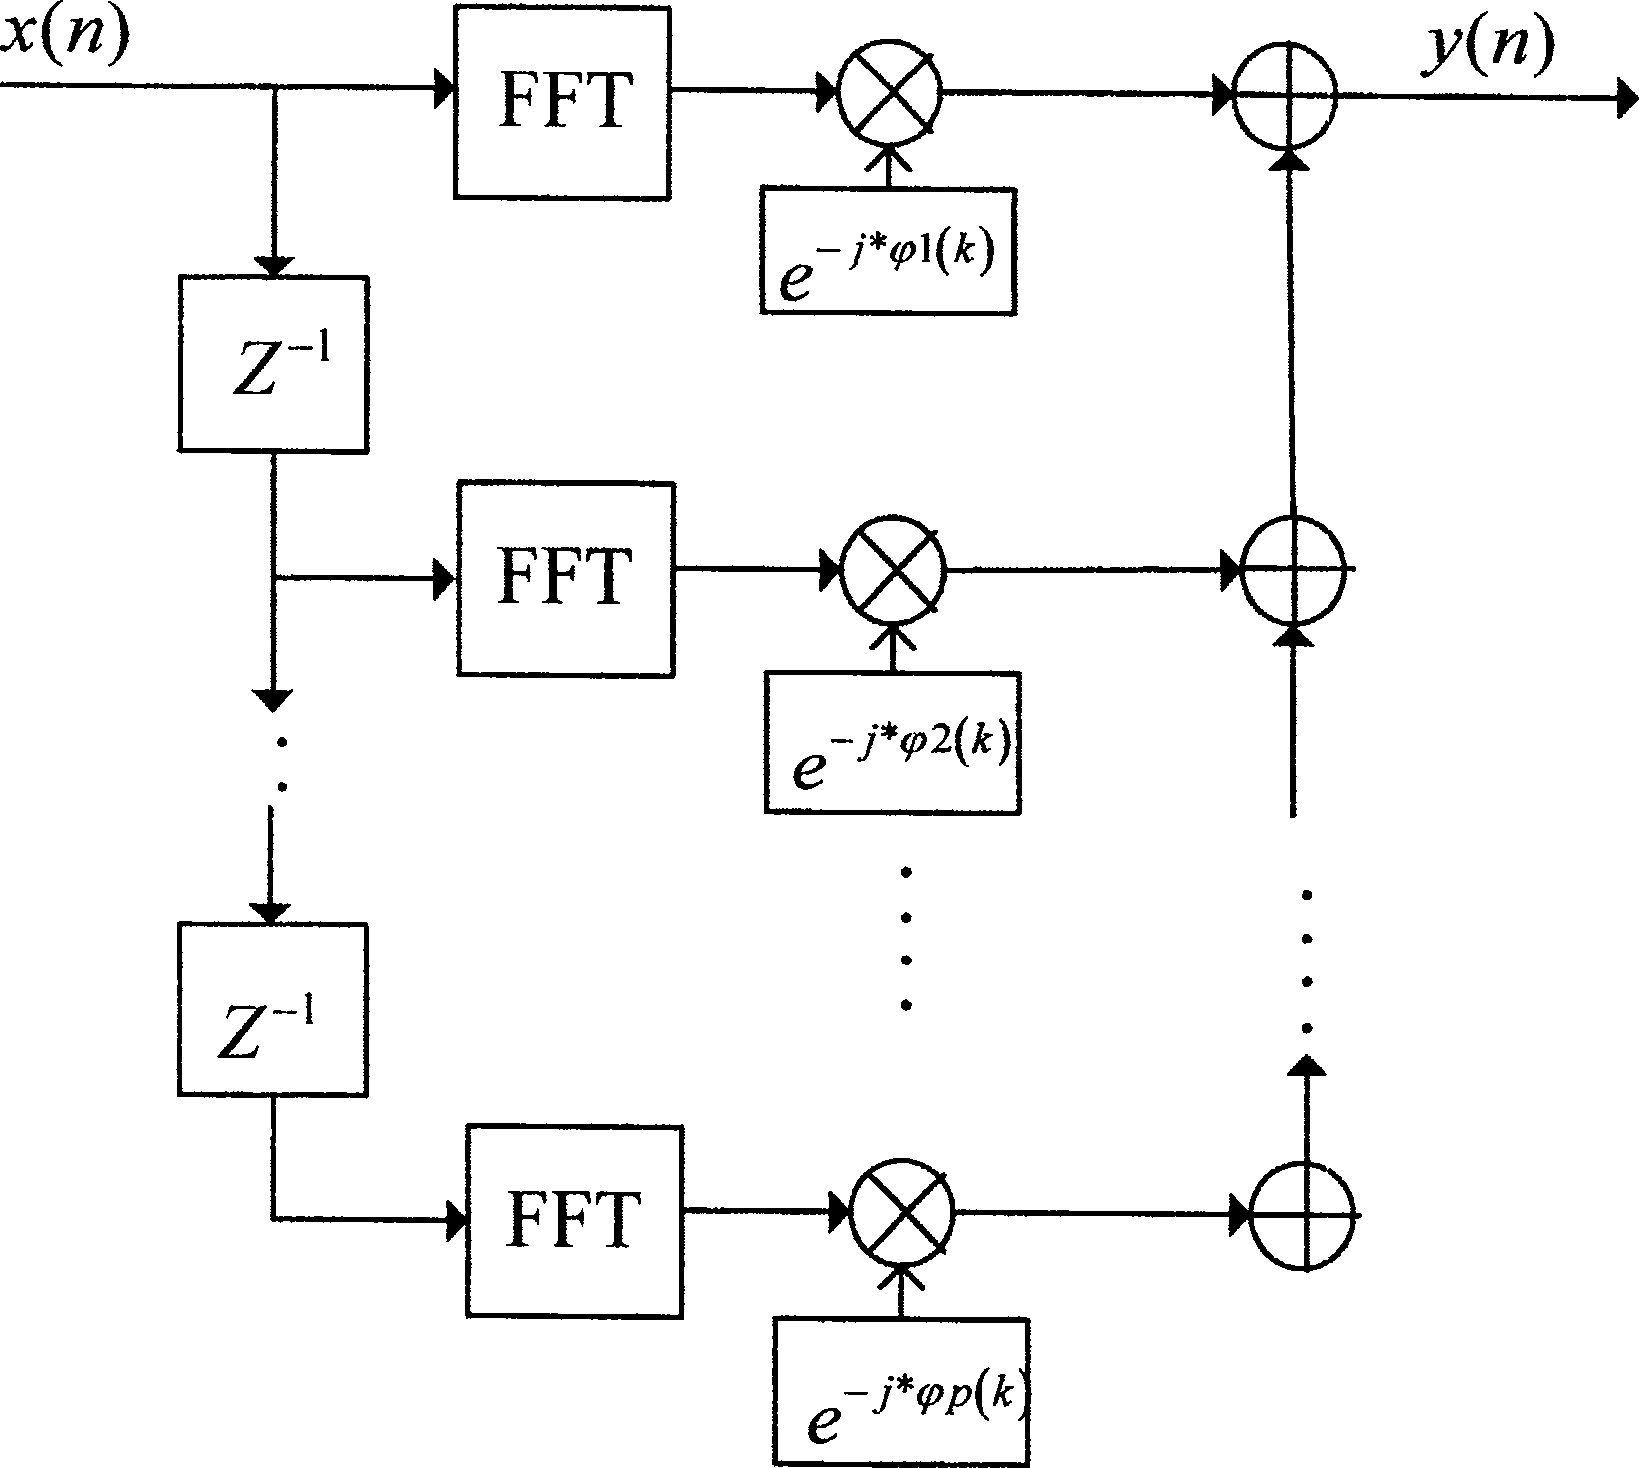 Digital signal processing method for multi-channel high-frequency radar receiver